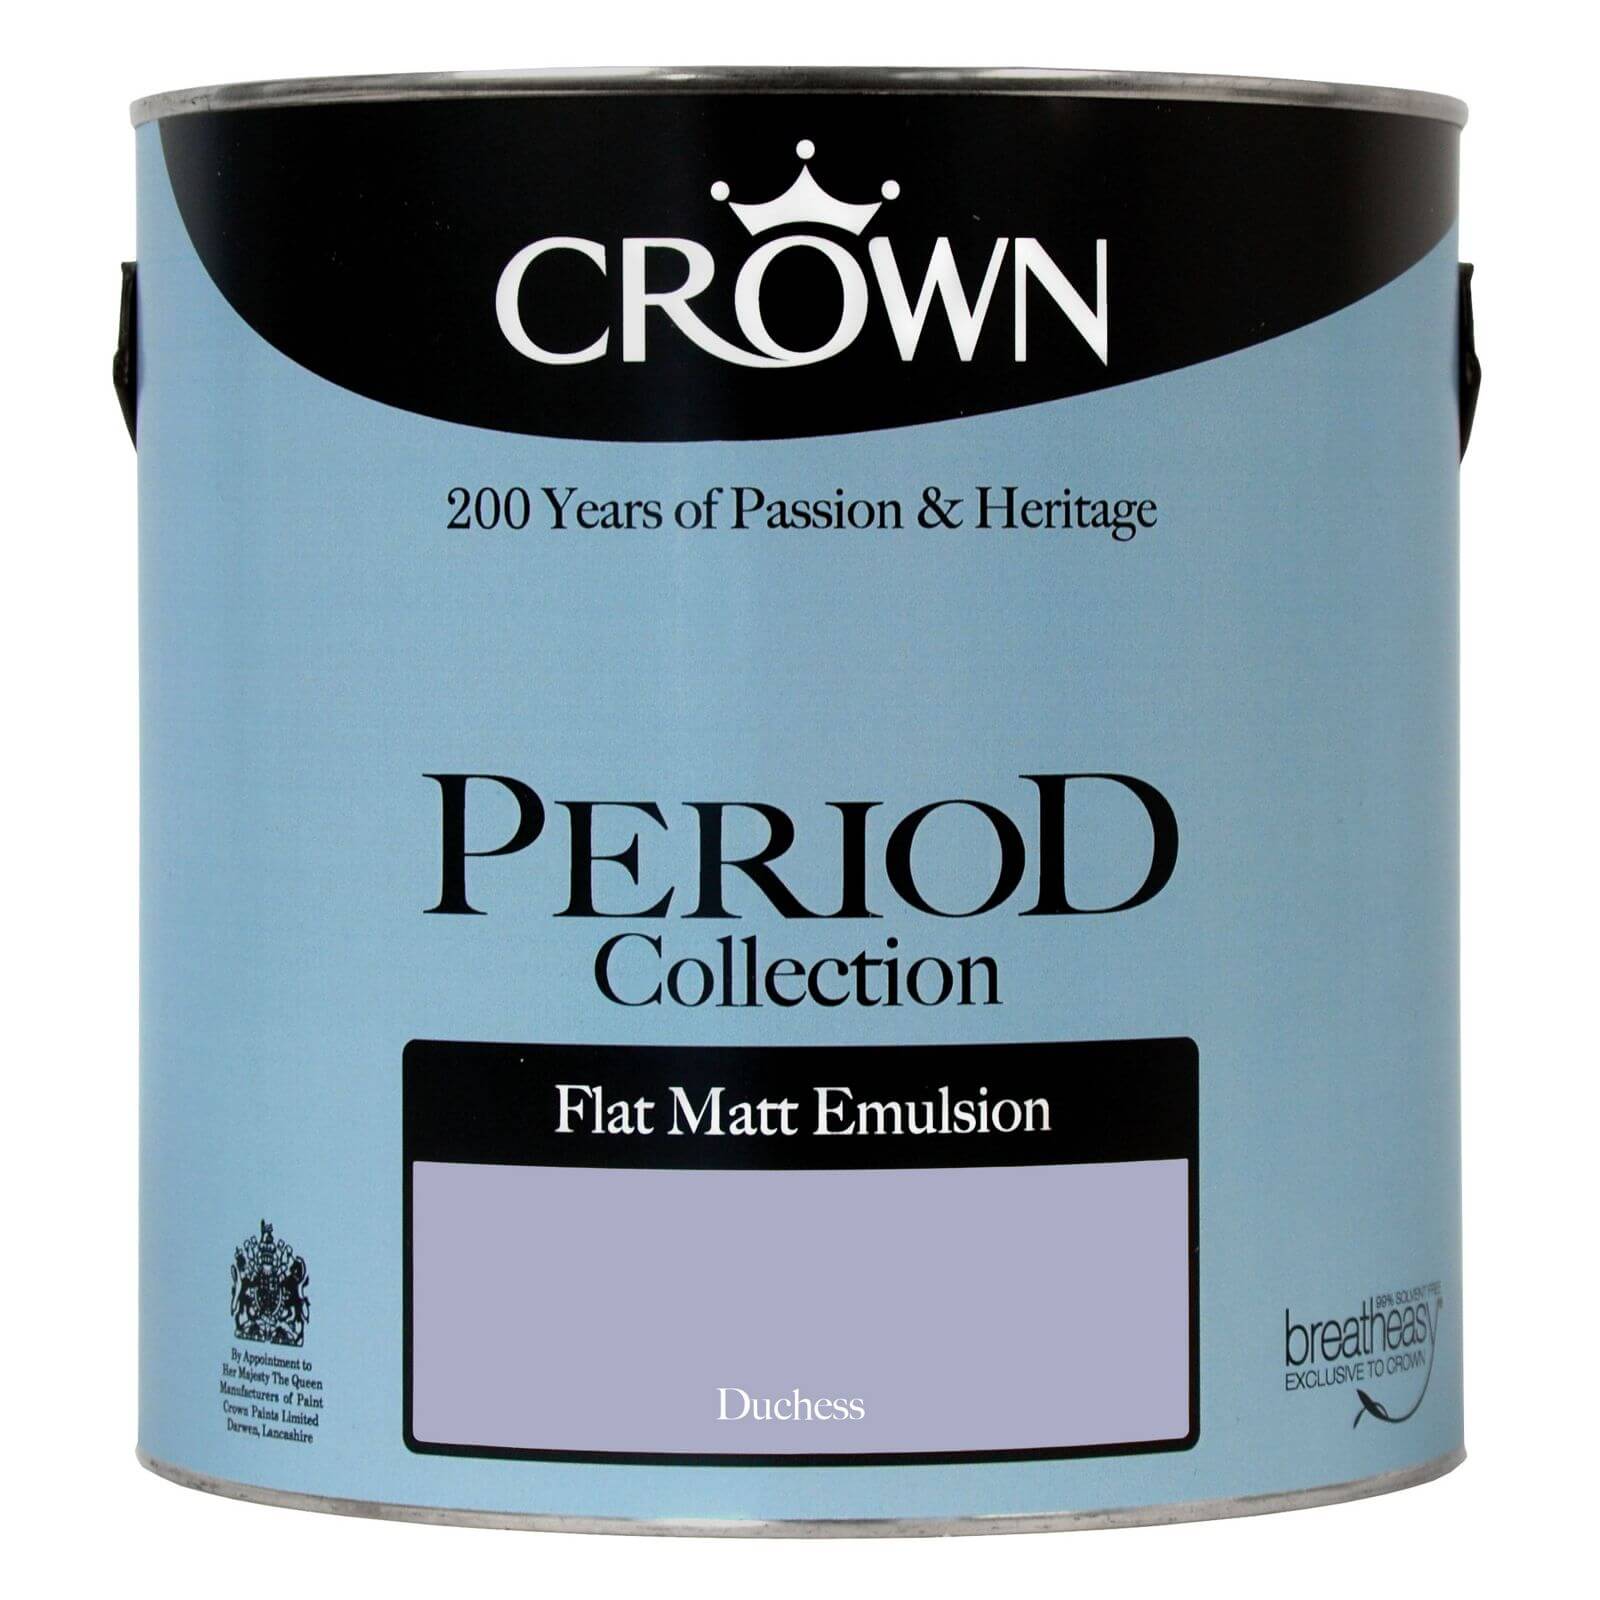 Crown Period Collection Duchess - Flat Matt Emulsion Paint - 2.5L